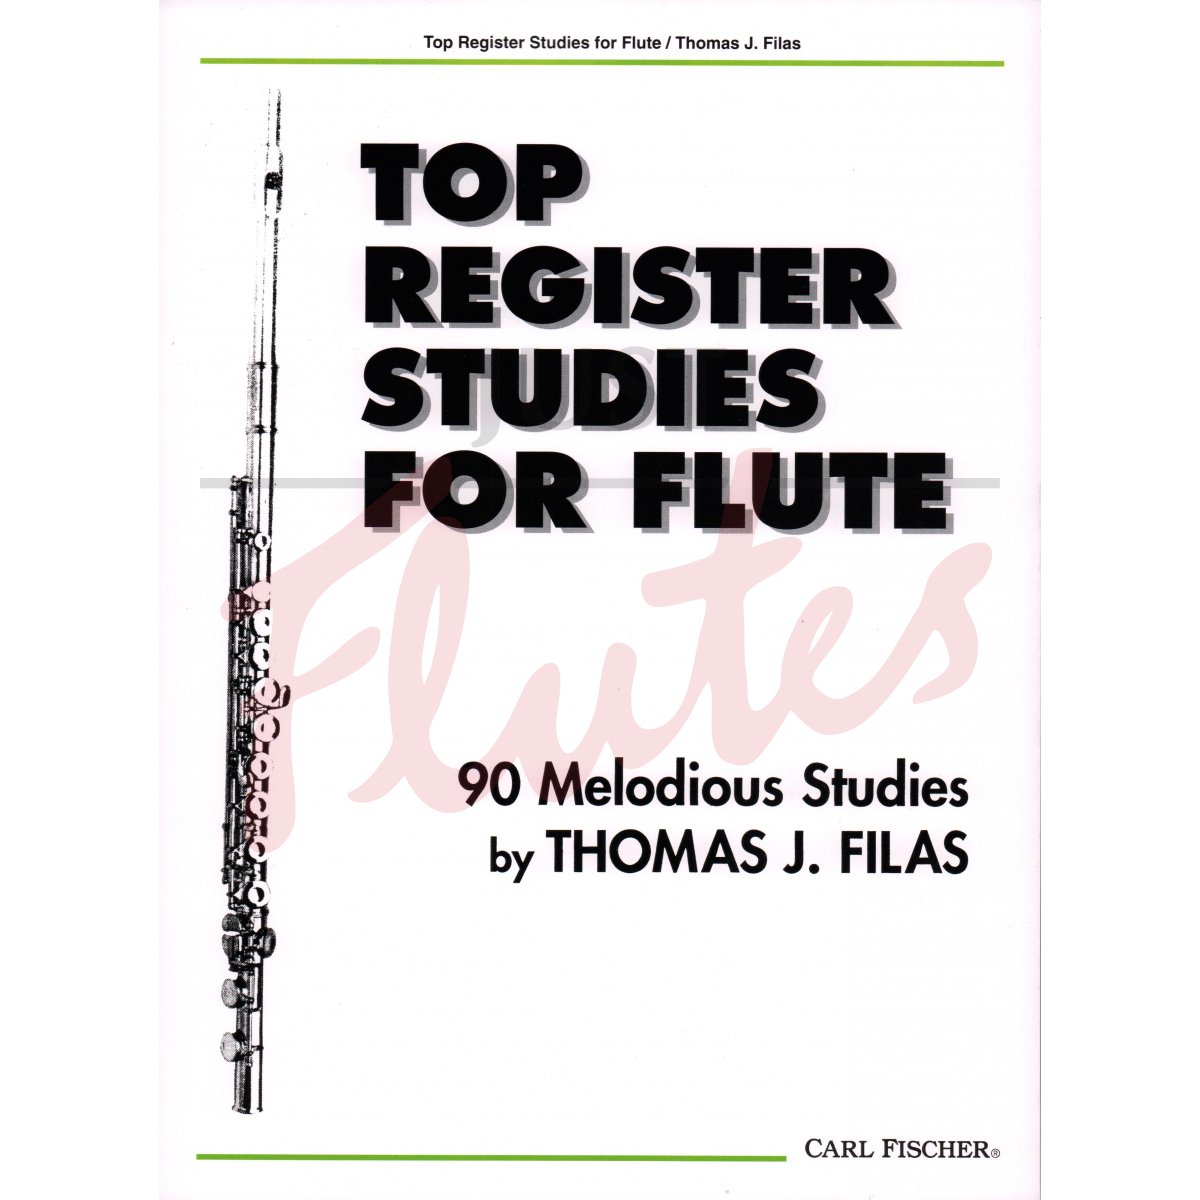 Top Register Studies for Flute: 90 Melodious Studies